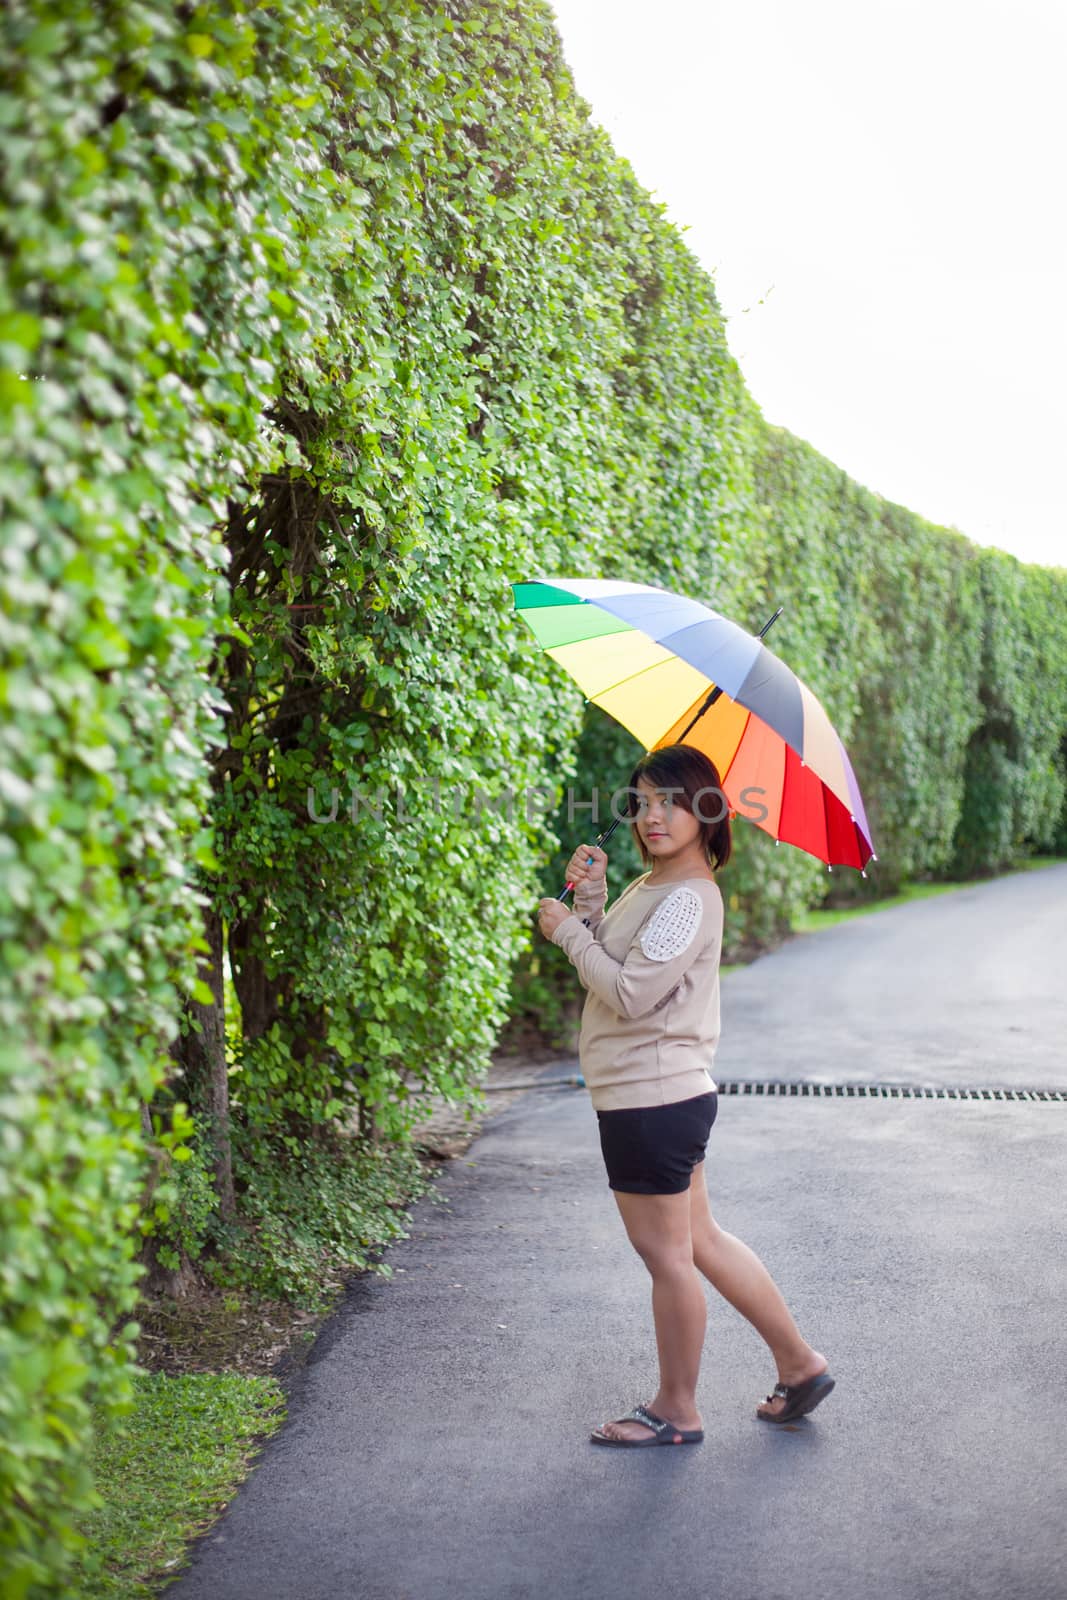 Asian woman holding an umbrella on the sidewalk. The Park